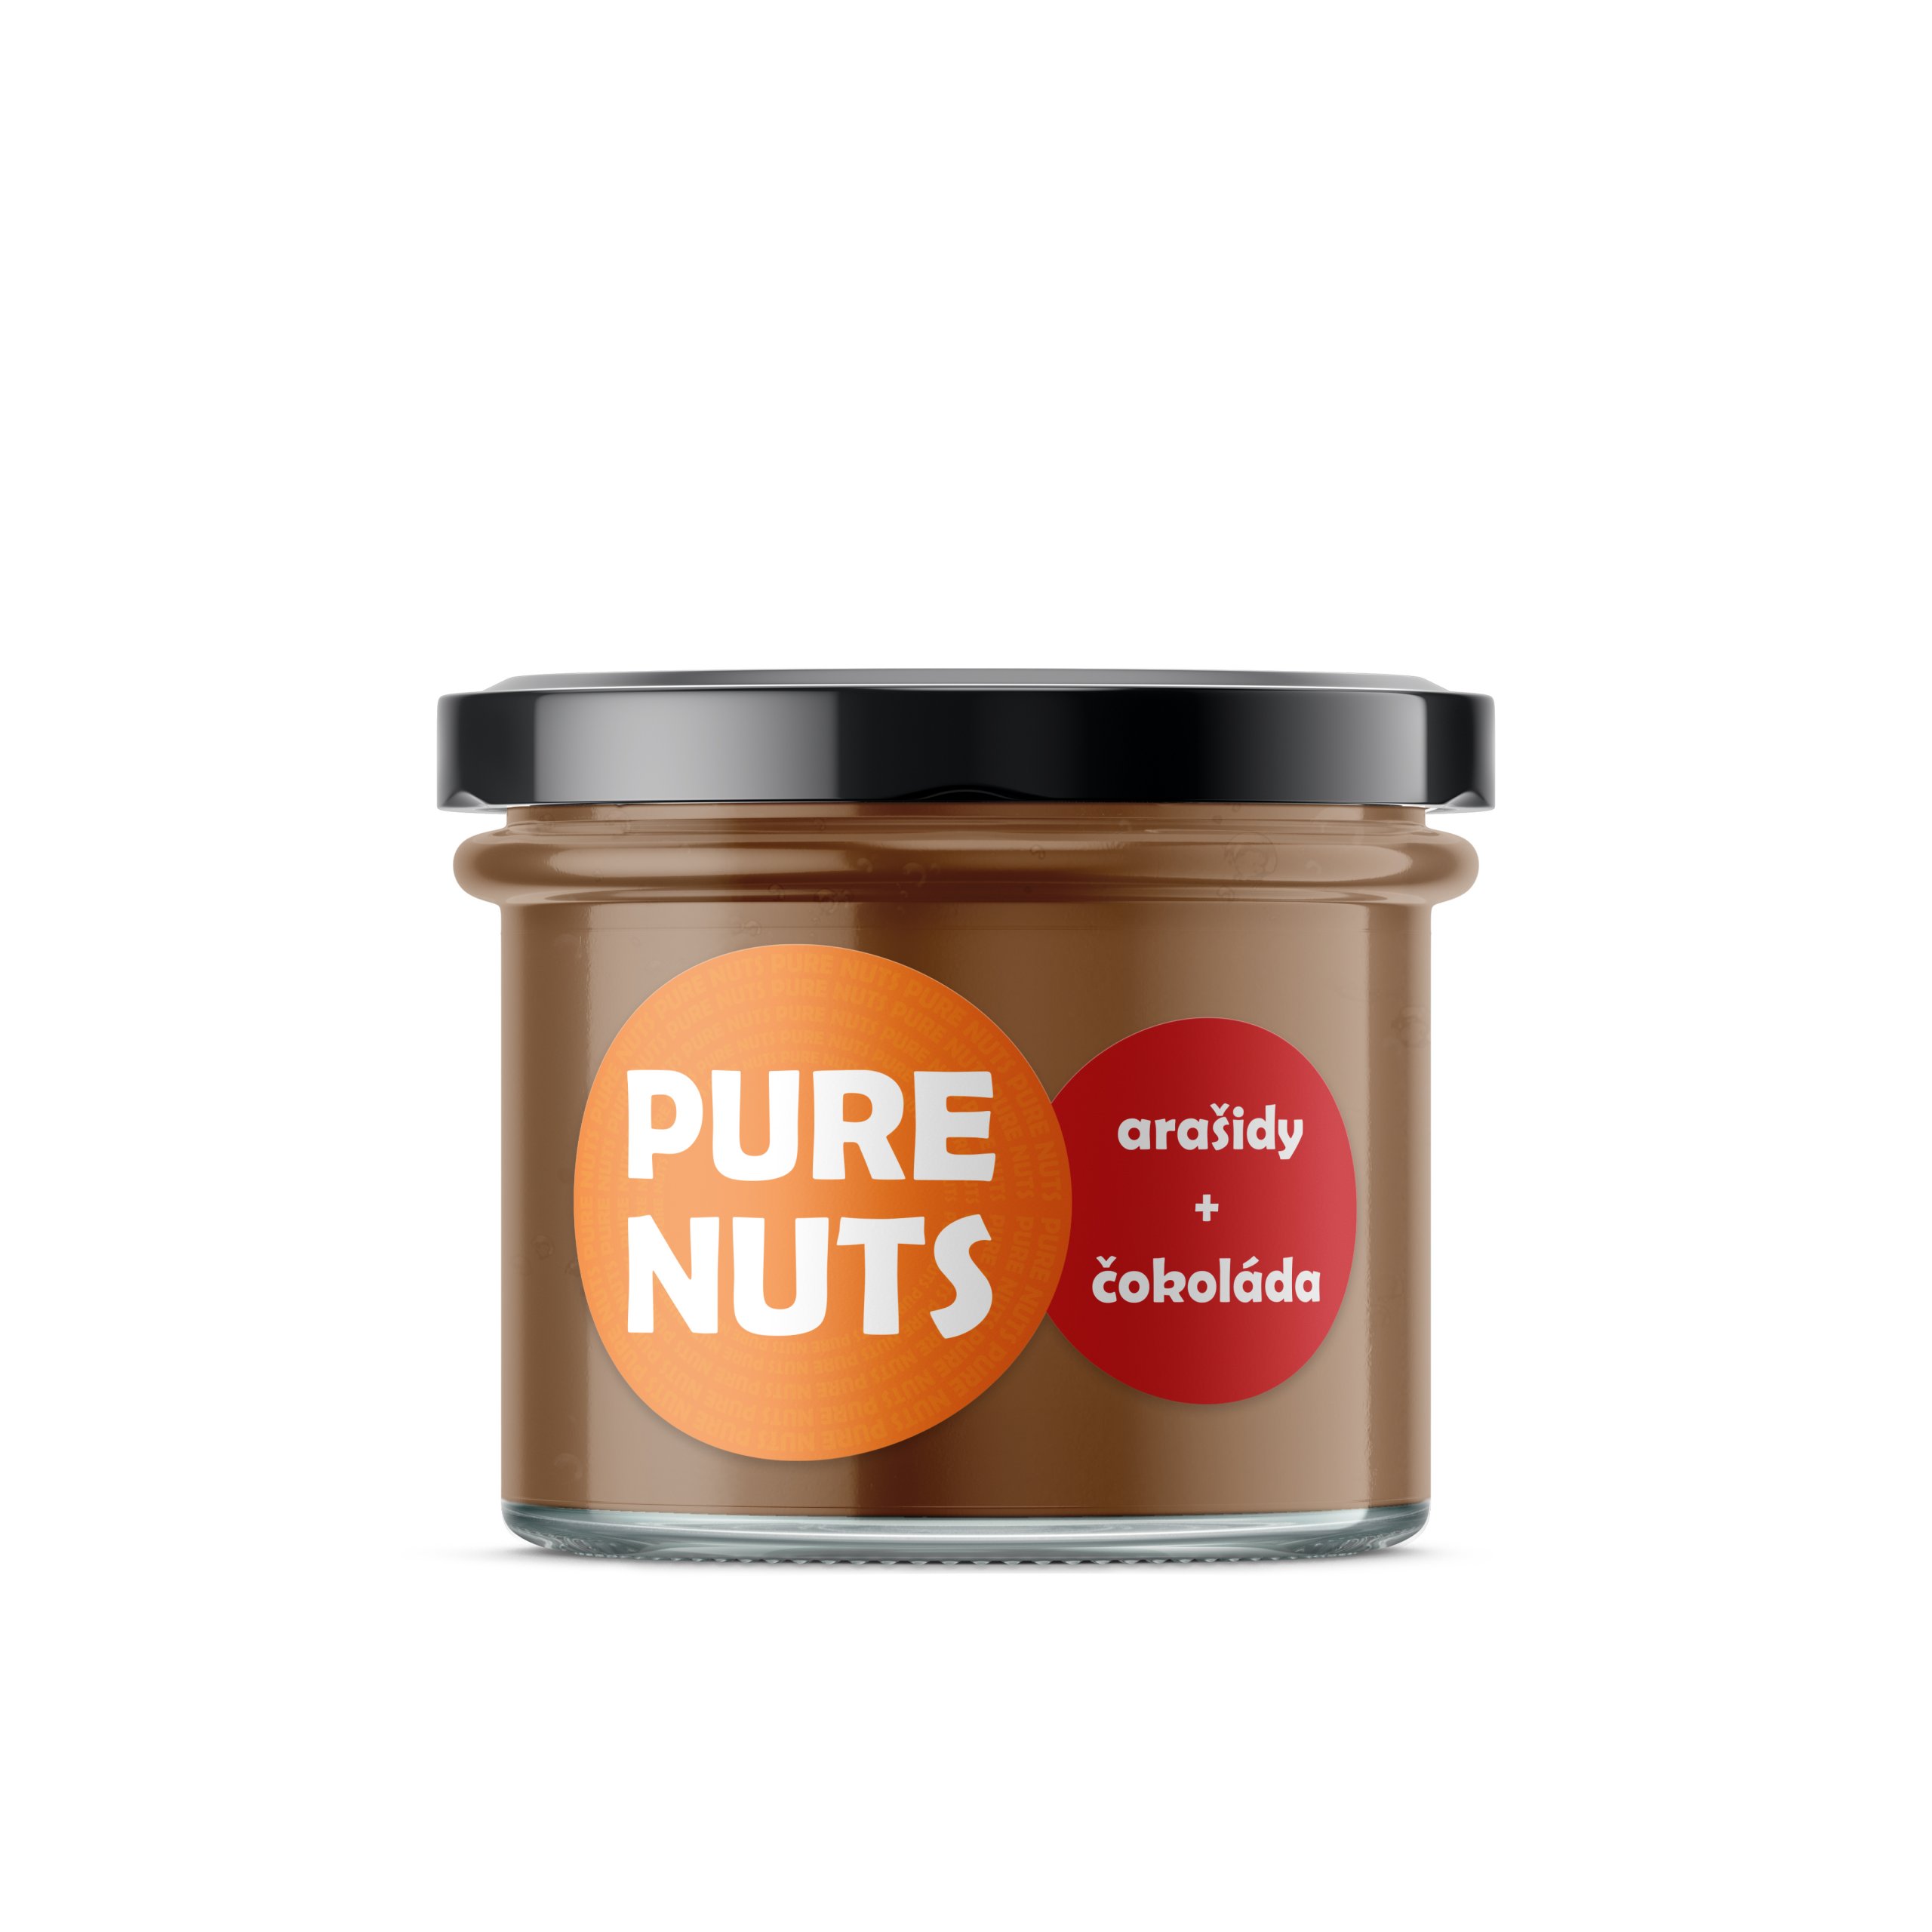 Pure nuts Arašidy + čokoláda, 200 g